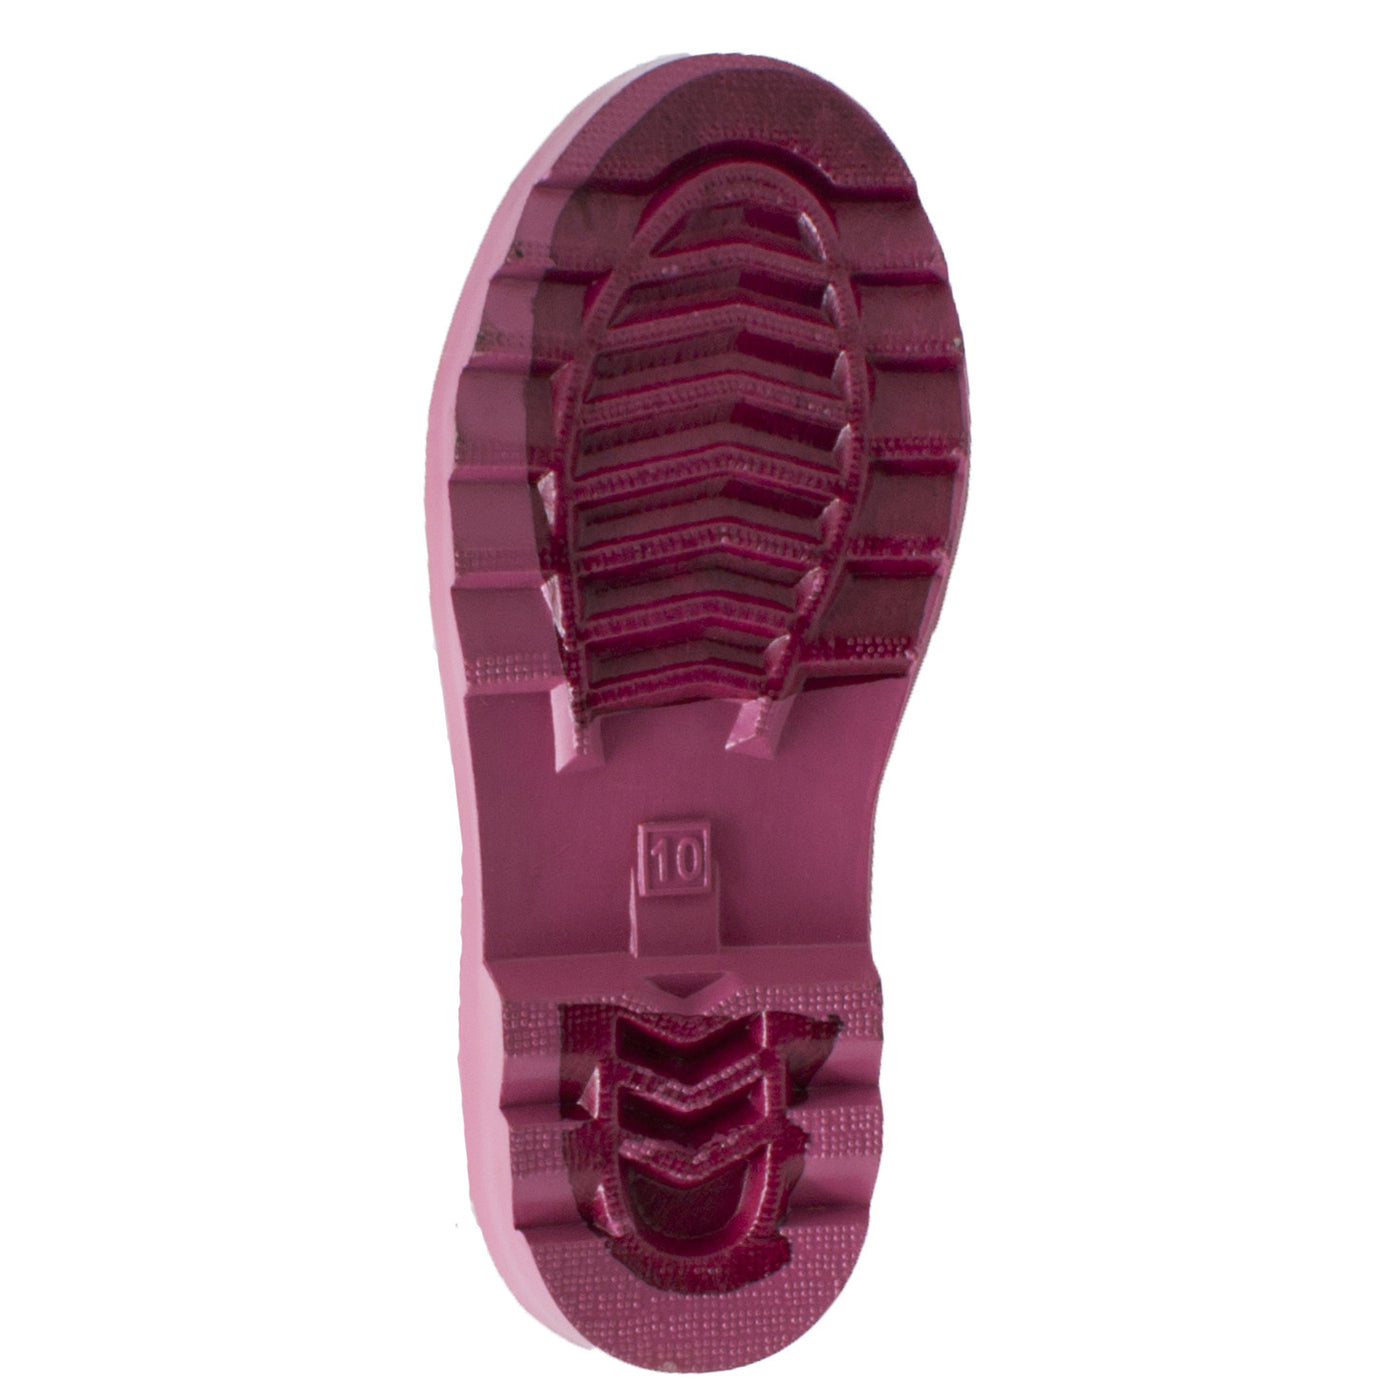 Toddler's "Lil' Pink" Rubber Boot Pink - CI-5002 - Shop Genuine Leather men & women's boots online | AdTecFootWear